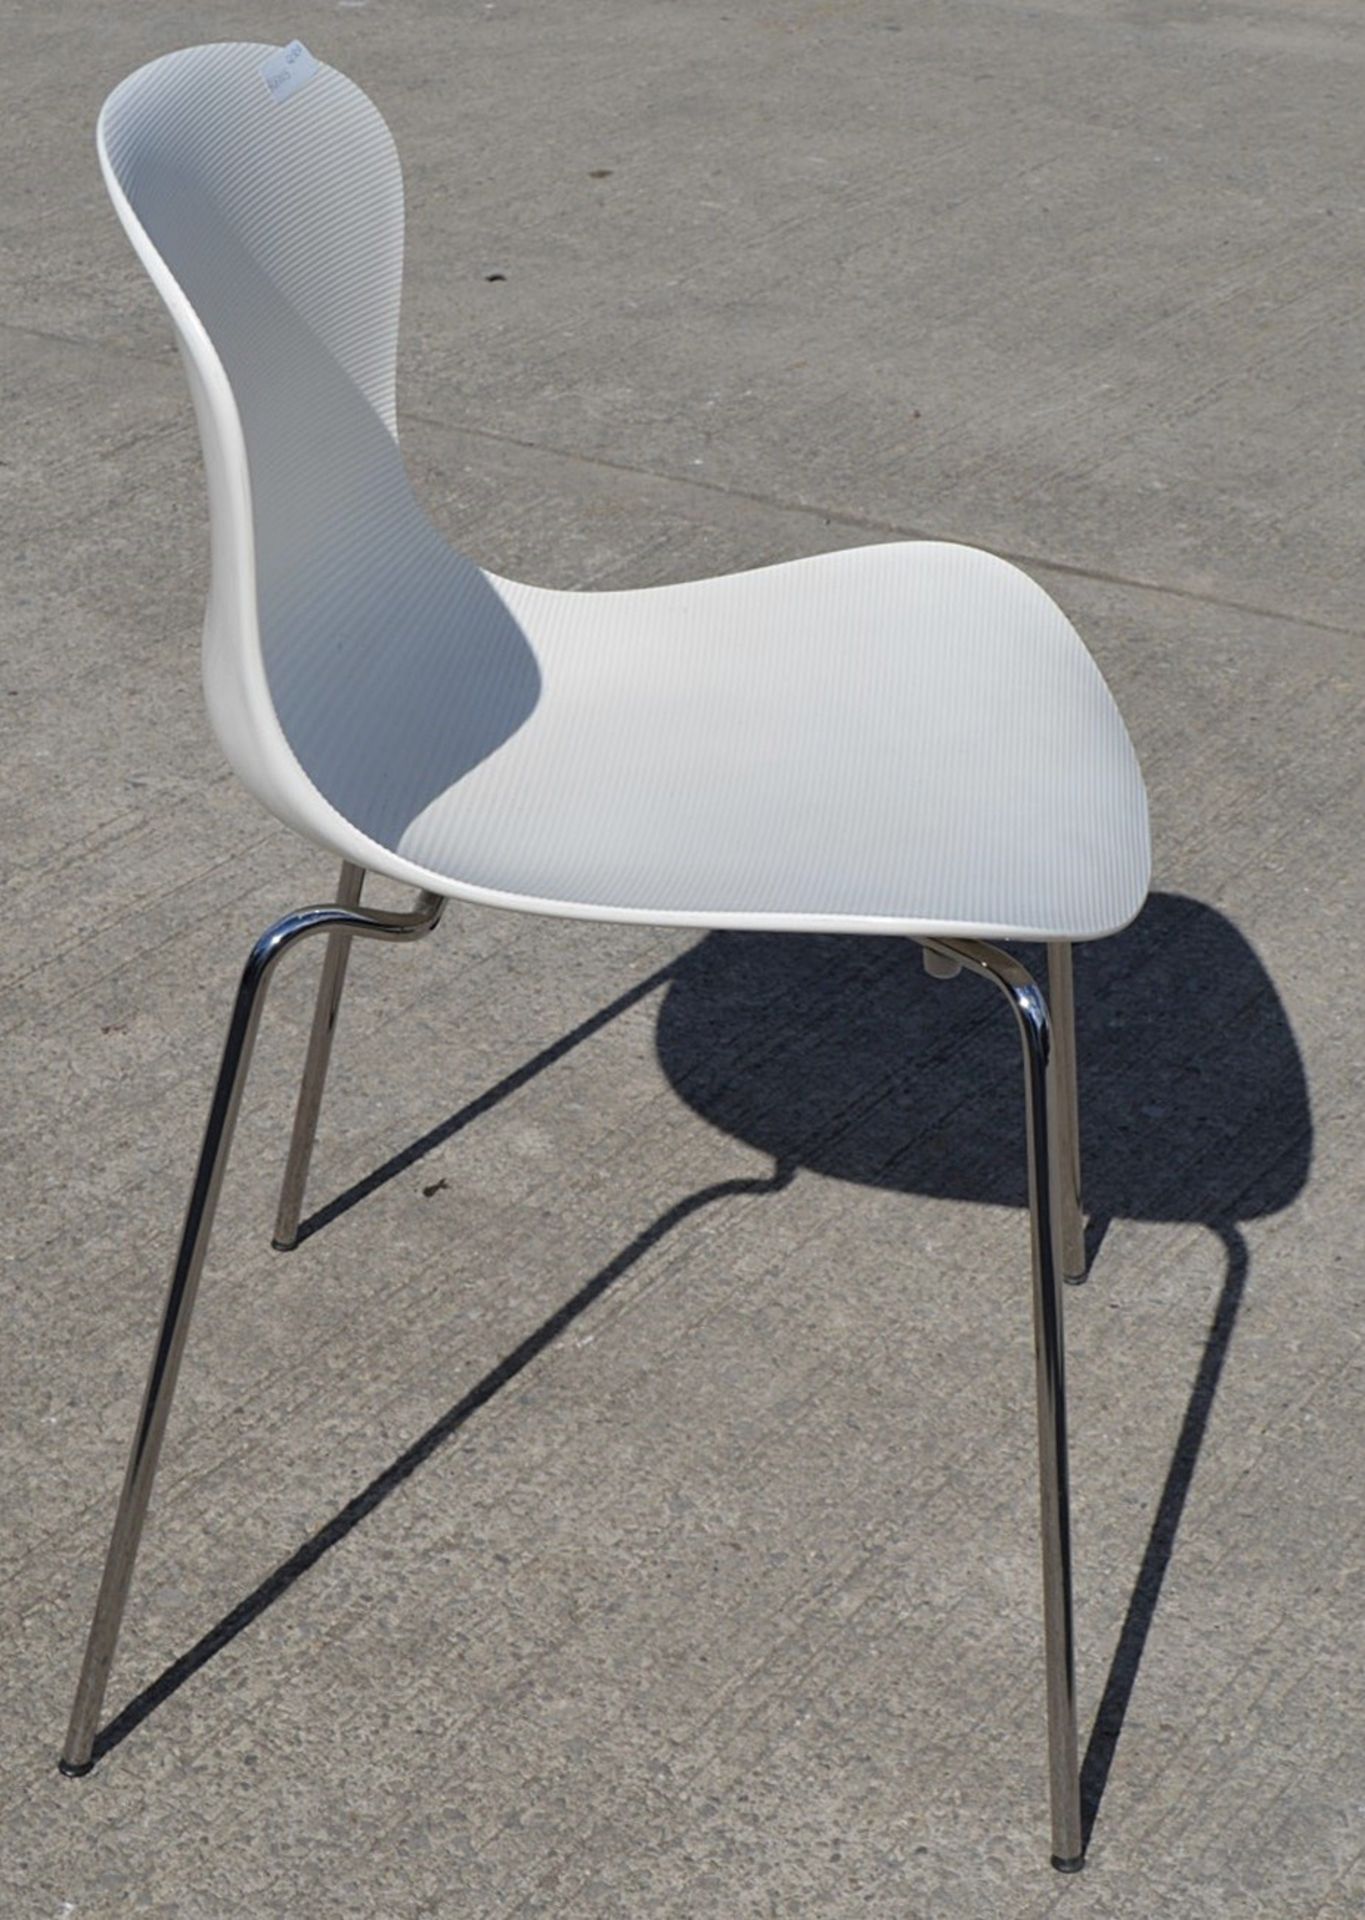 1 x Genuine Fritz Hansen 'Nap' Designer Chair In White & Chrome (KS50) - Dimensions: W48 x D40 x - Image 3 of 6